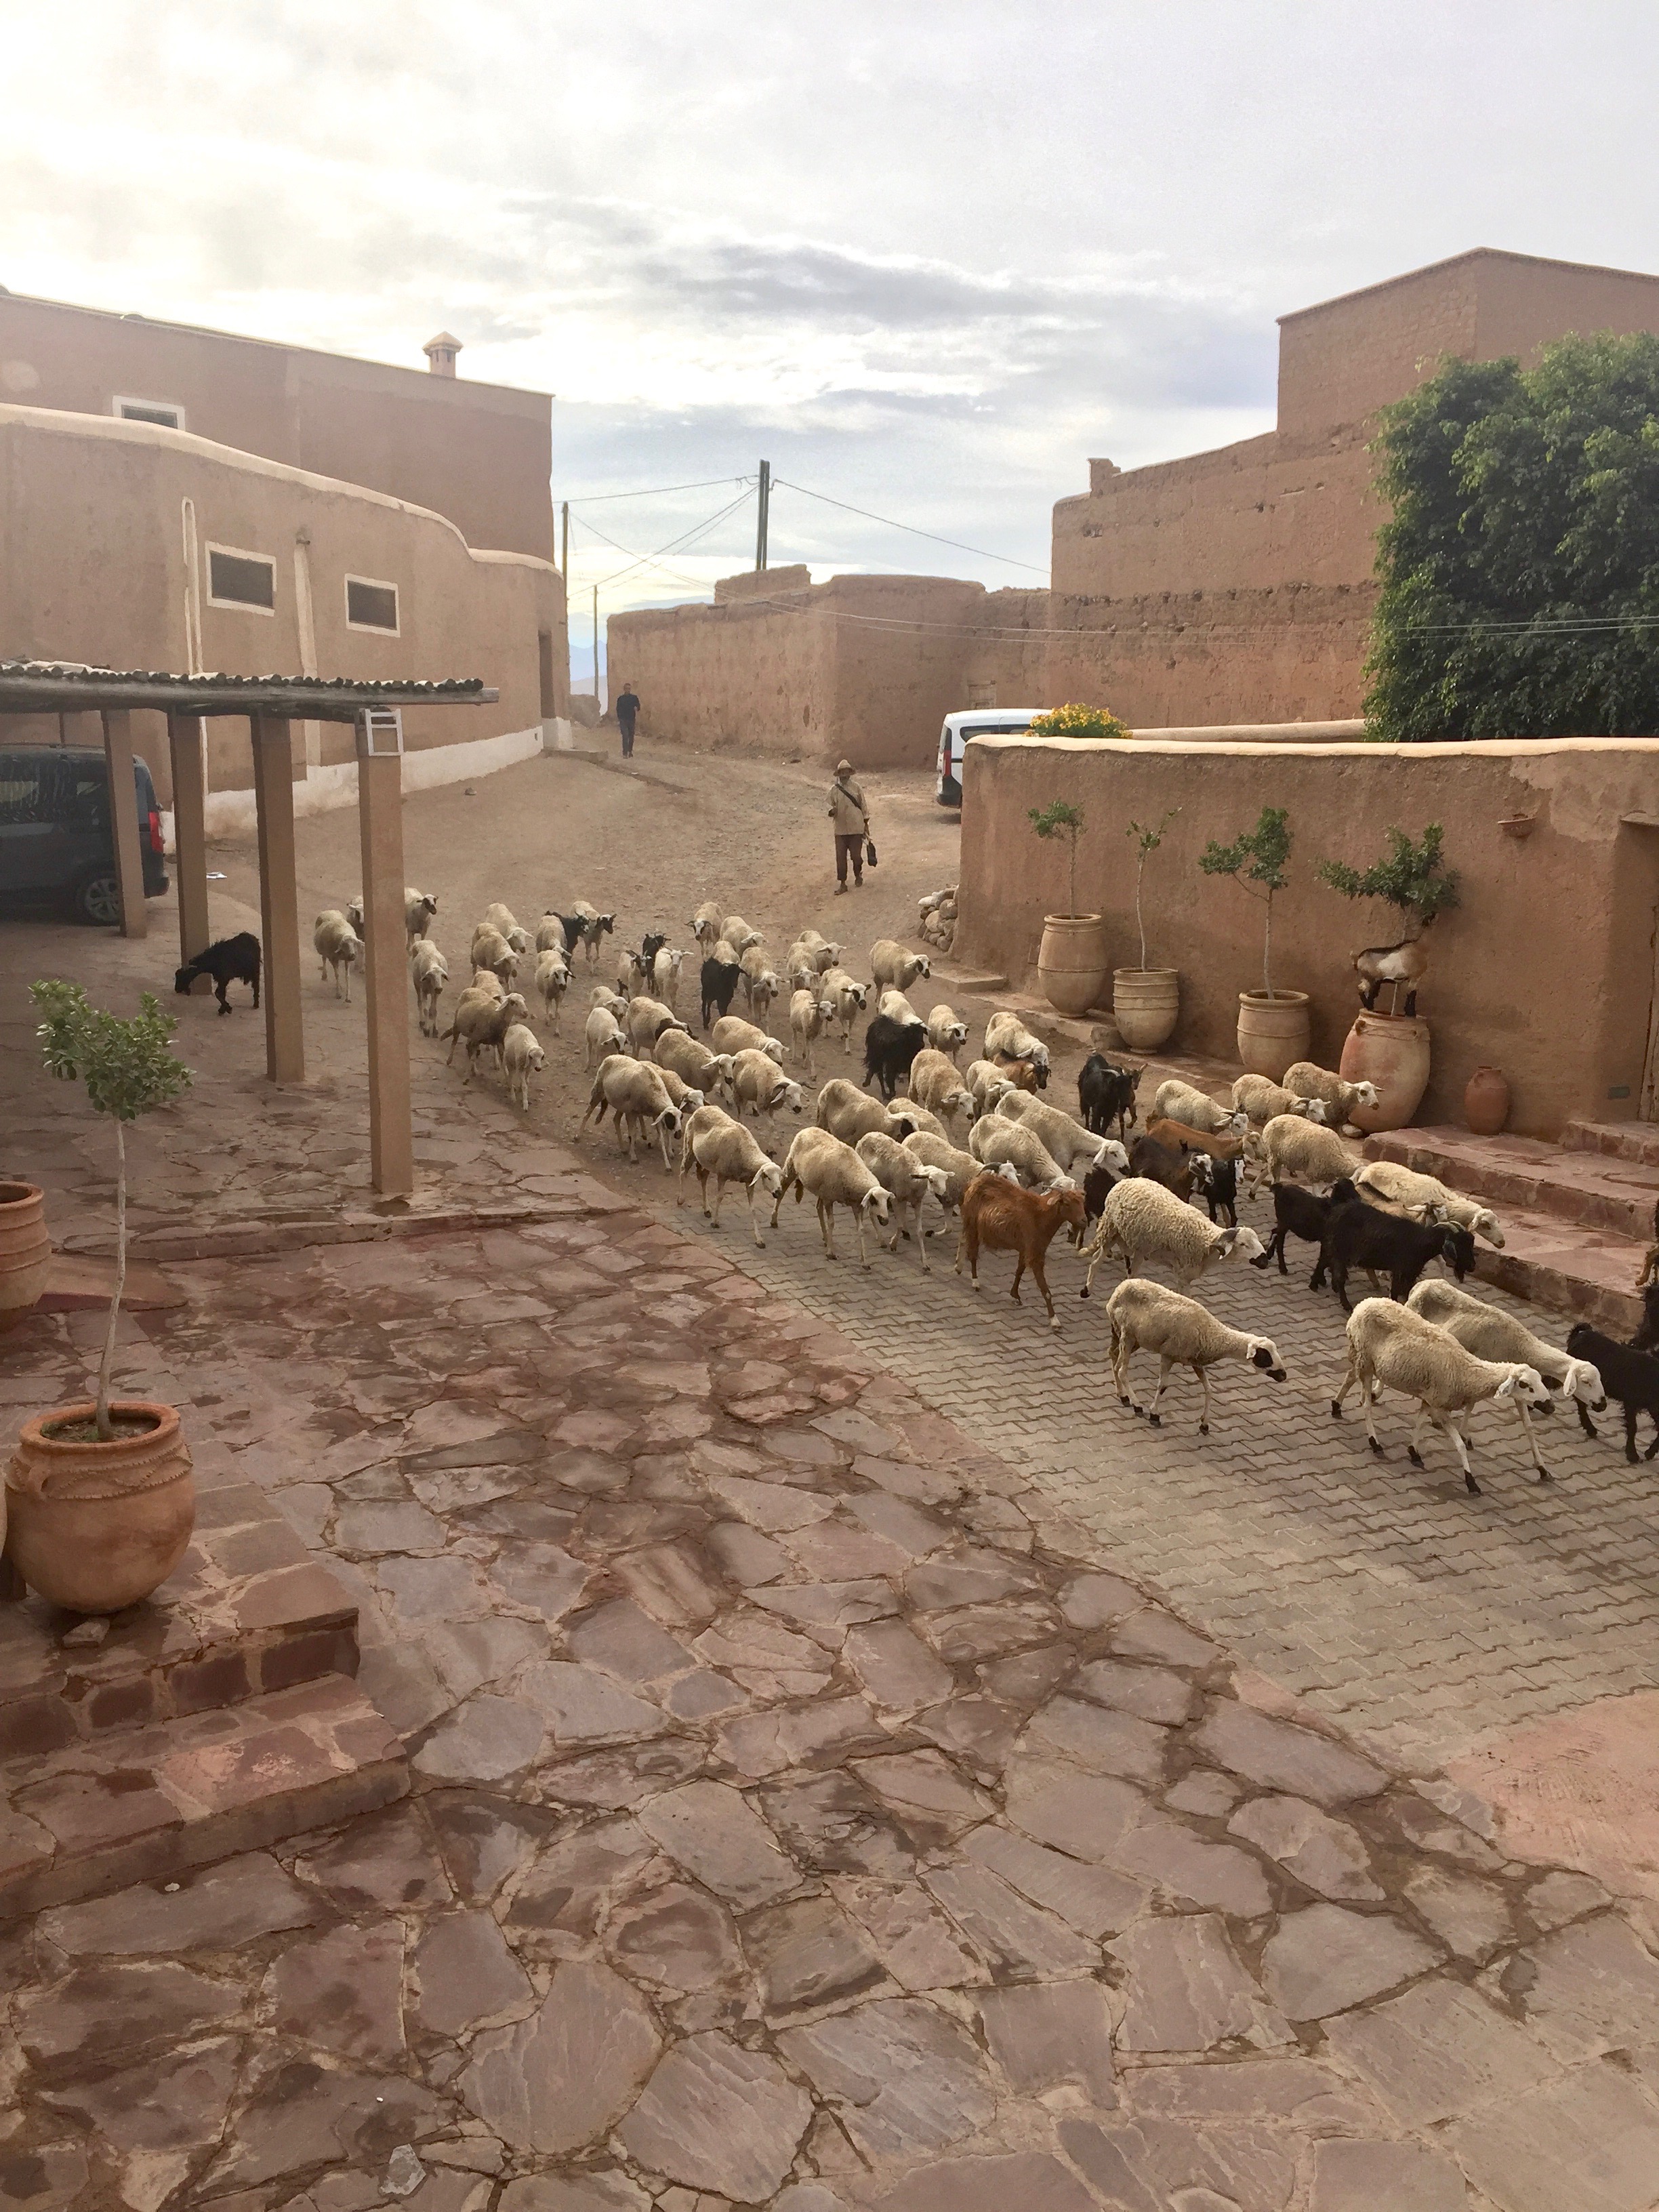 A berber village outside Marrakech